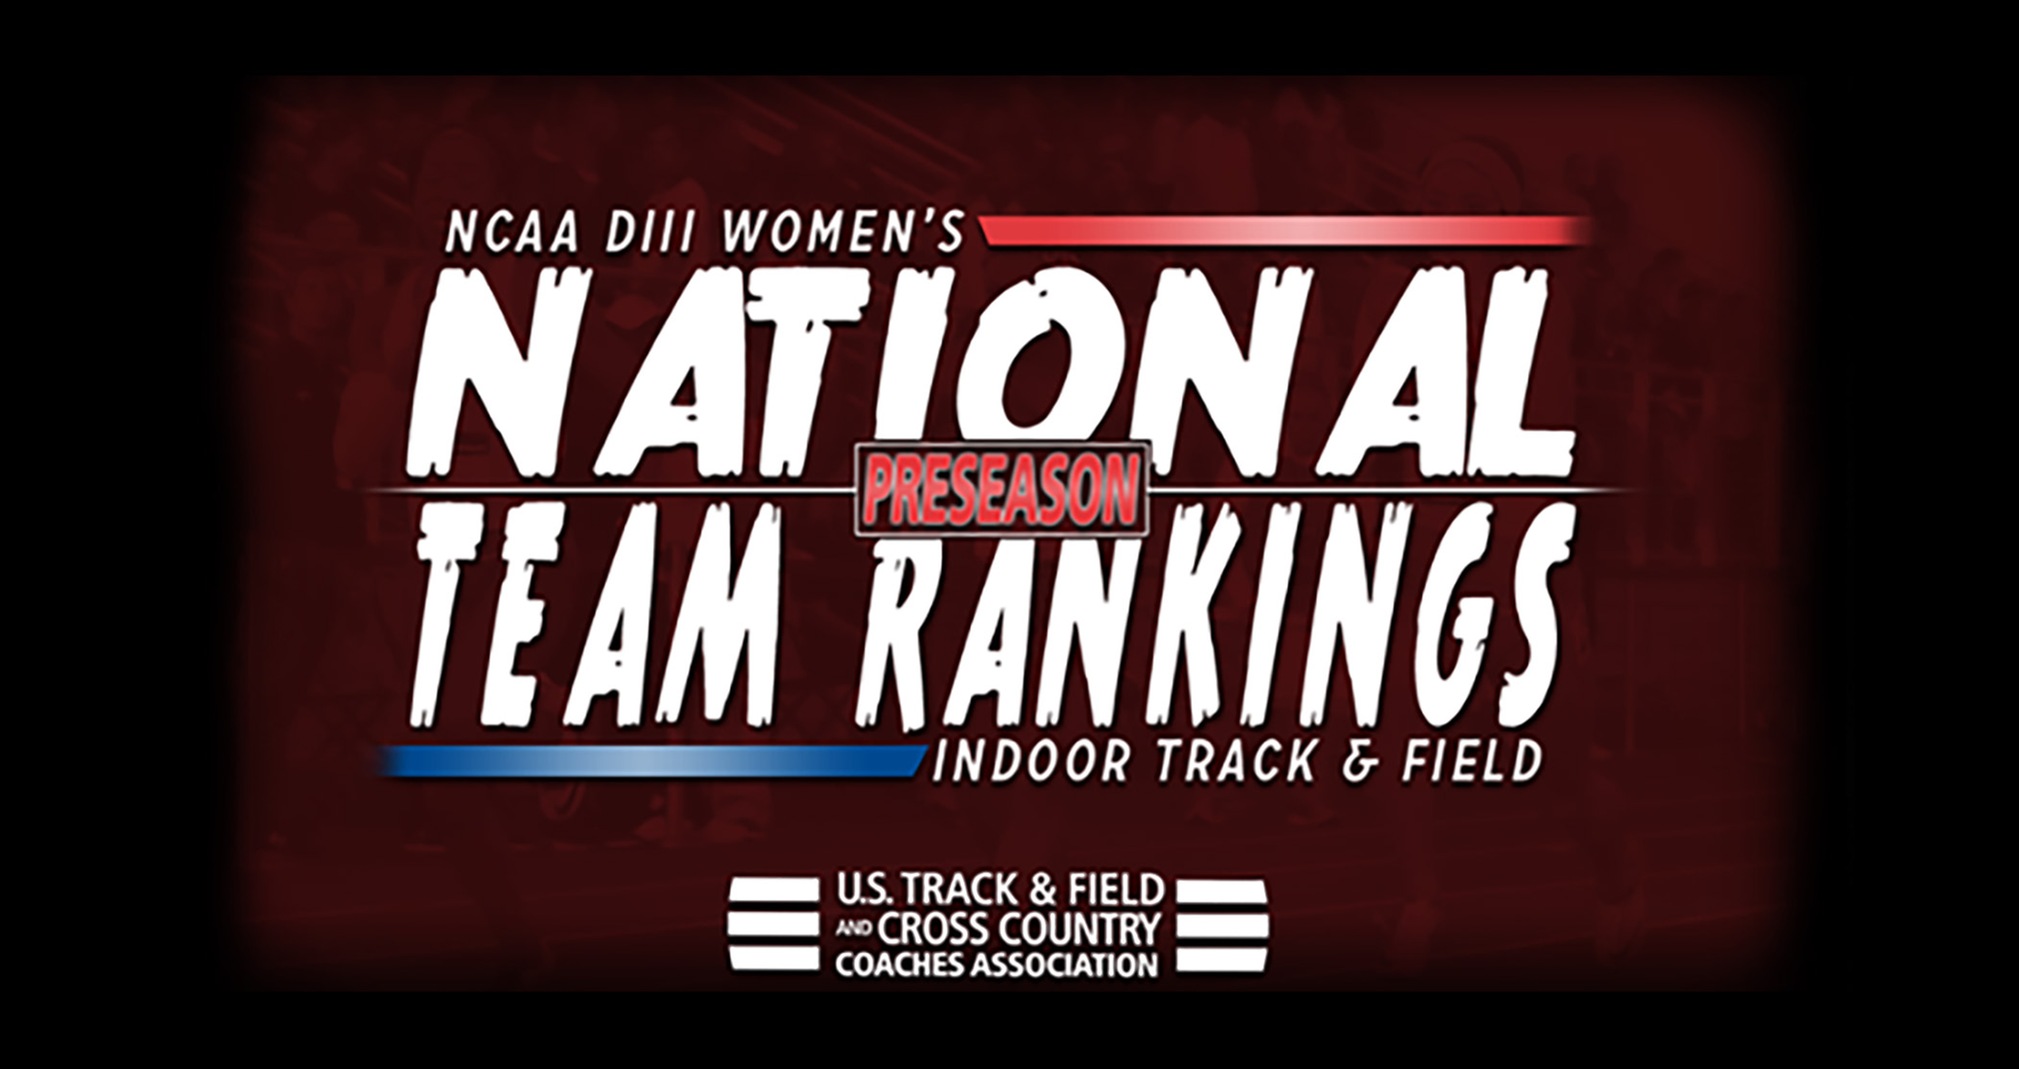 Titans Rank 12th In Women's Preseason Indoor Track & Field Rankings